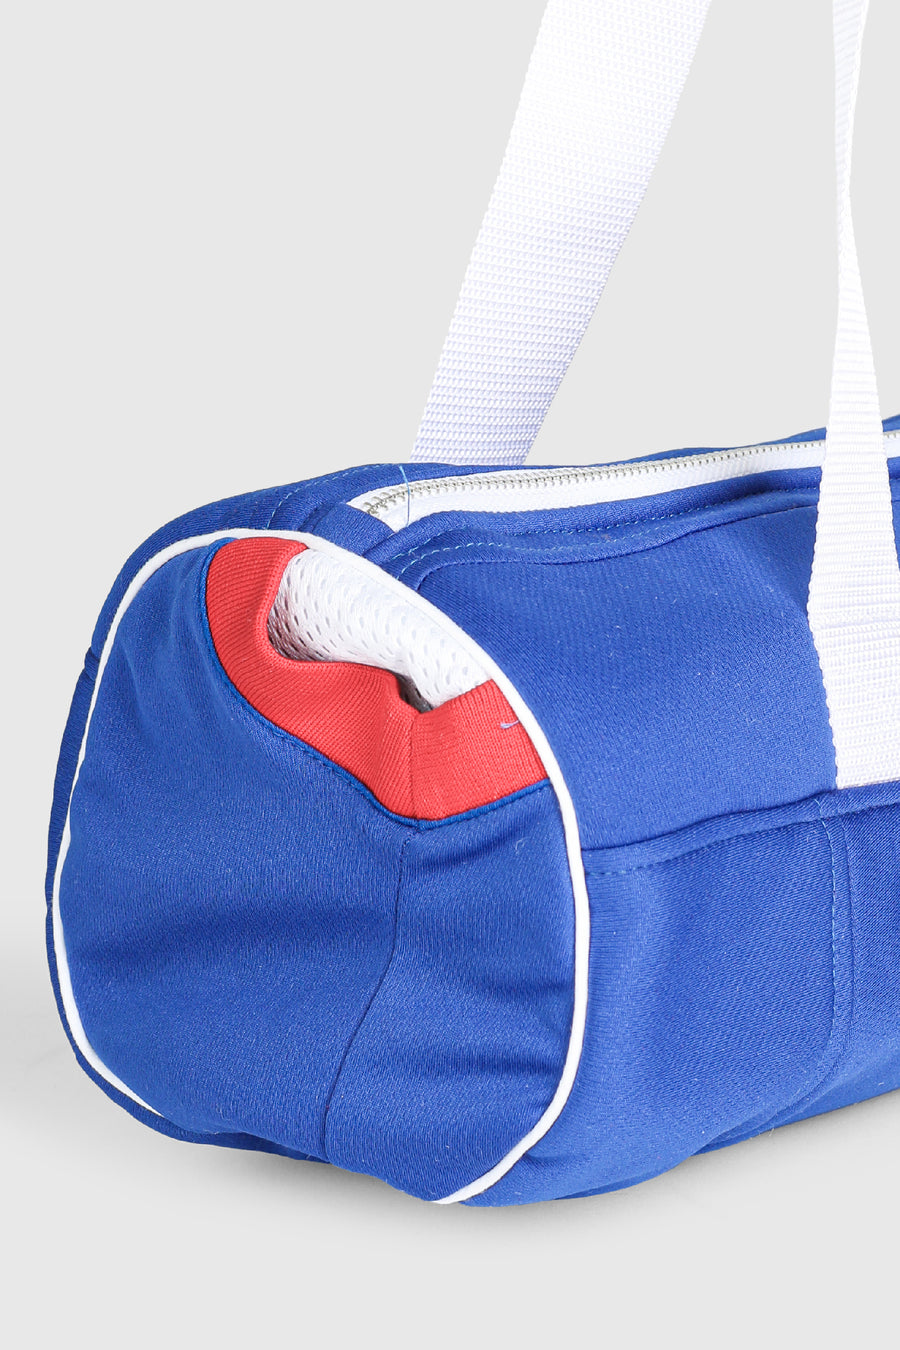 Rework Sixers NBA Duffle Bag